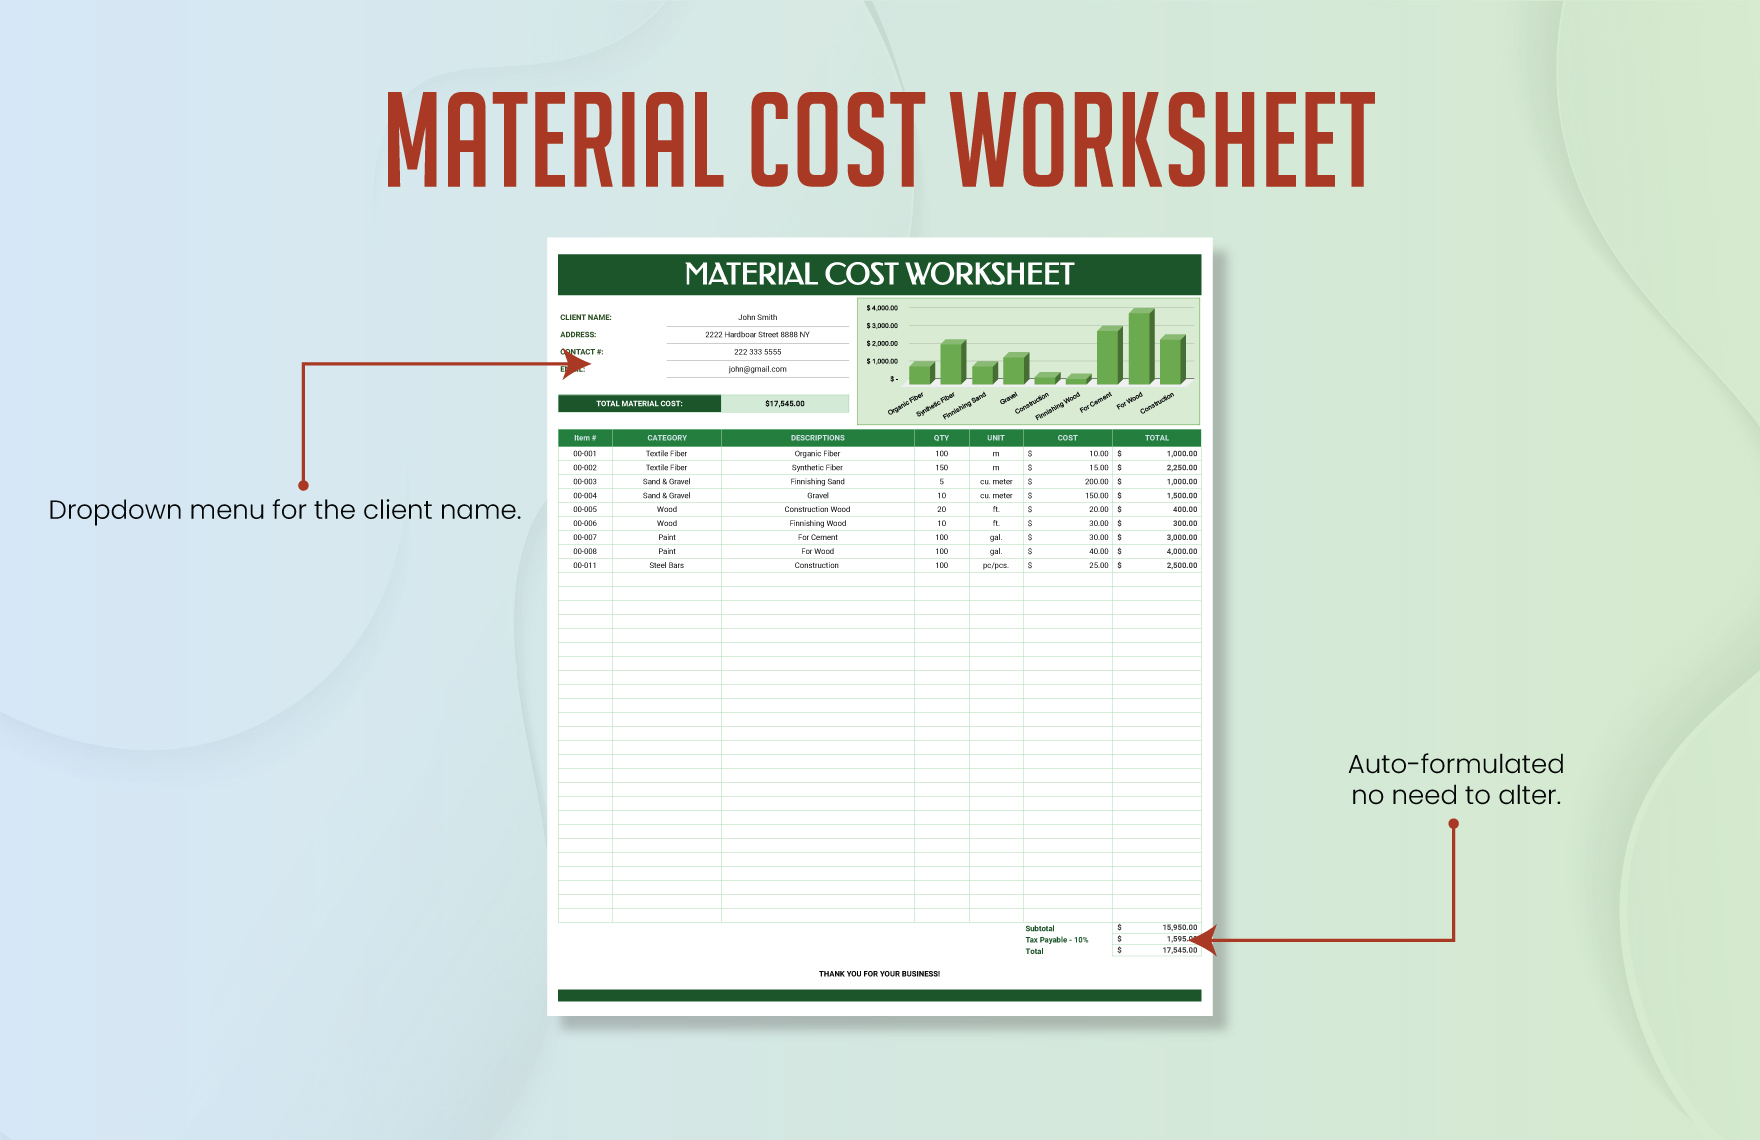 Material Cost Worksheet Template